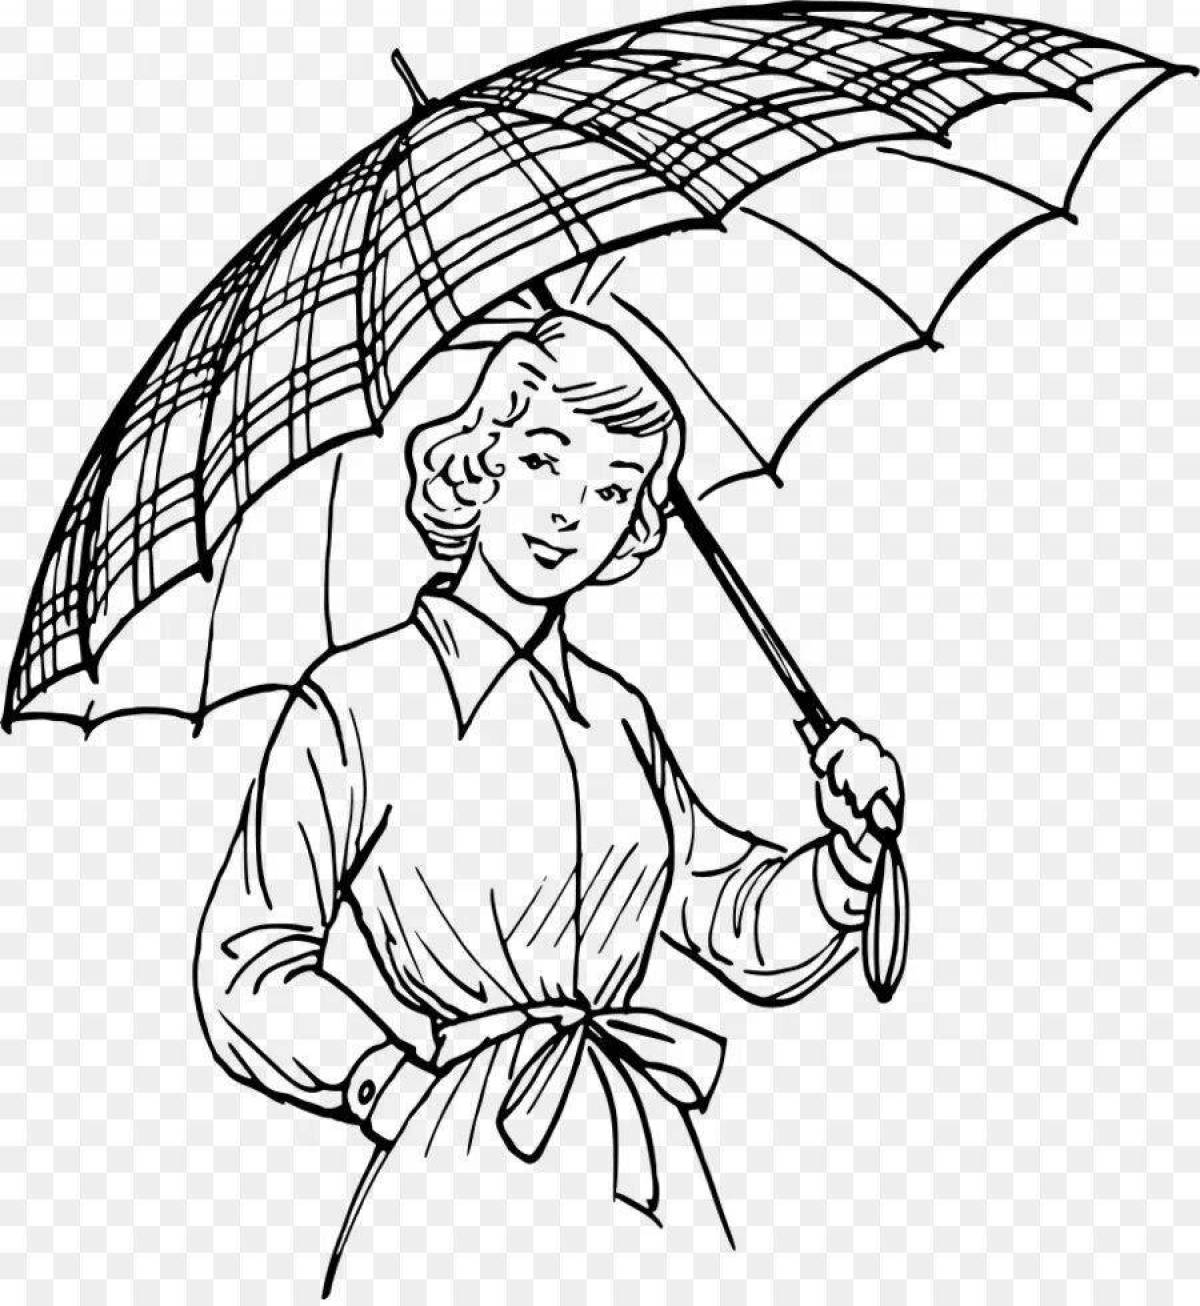 Shine coloring girl with umbrella